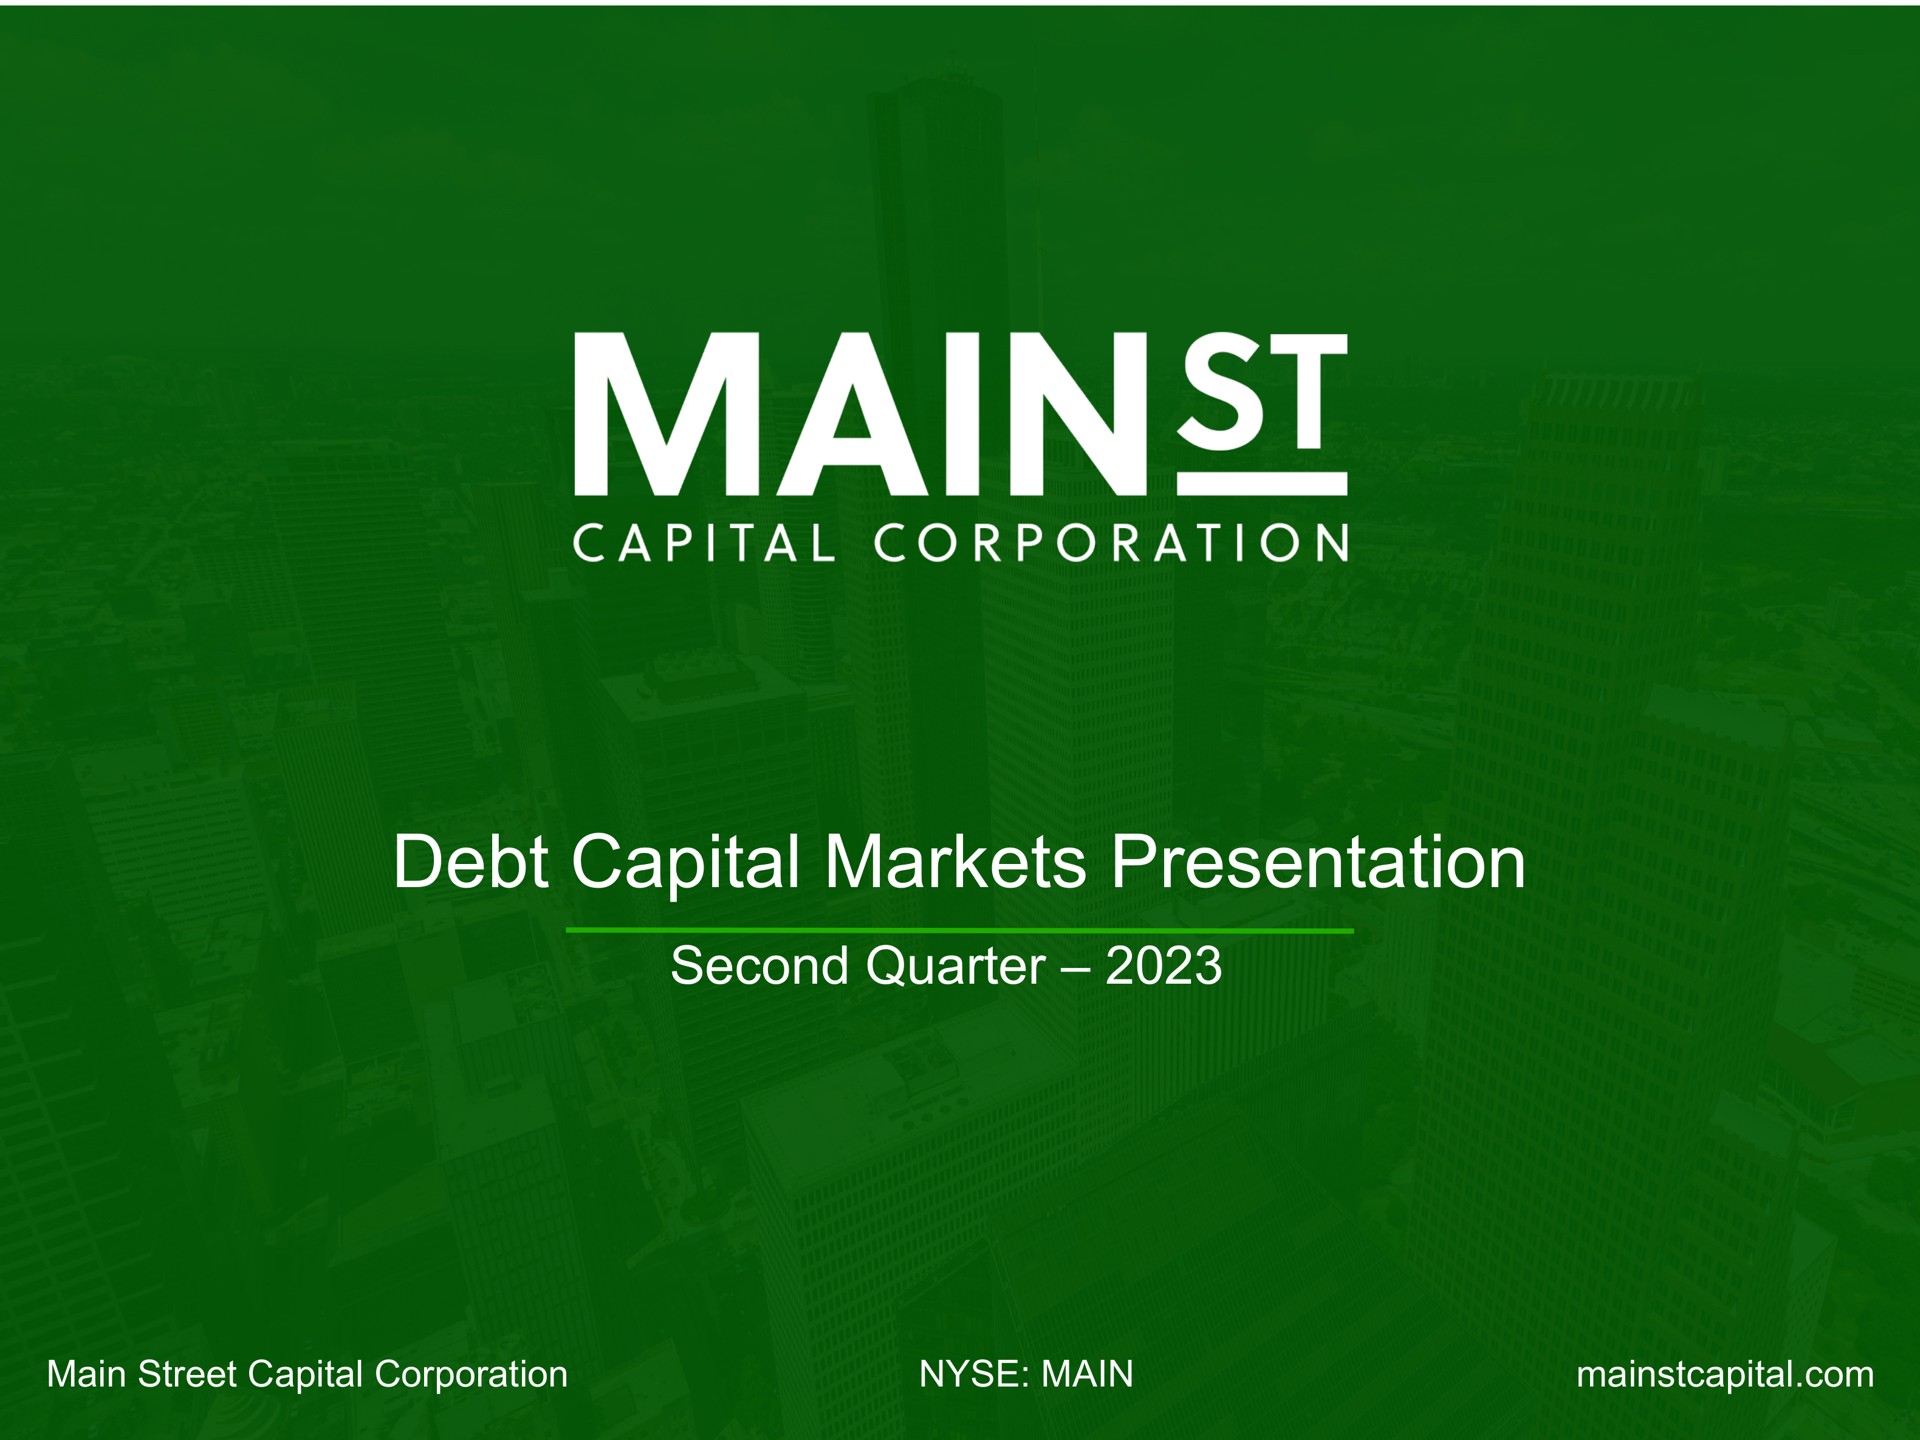 debt capital markets presentation second quarter main street capital corporation main mains | Main Street Capital